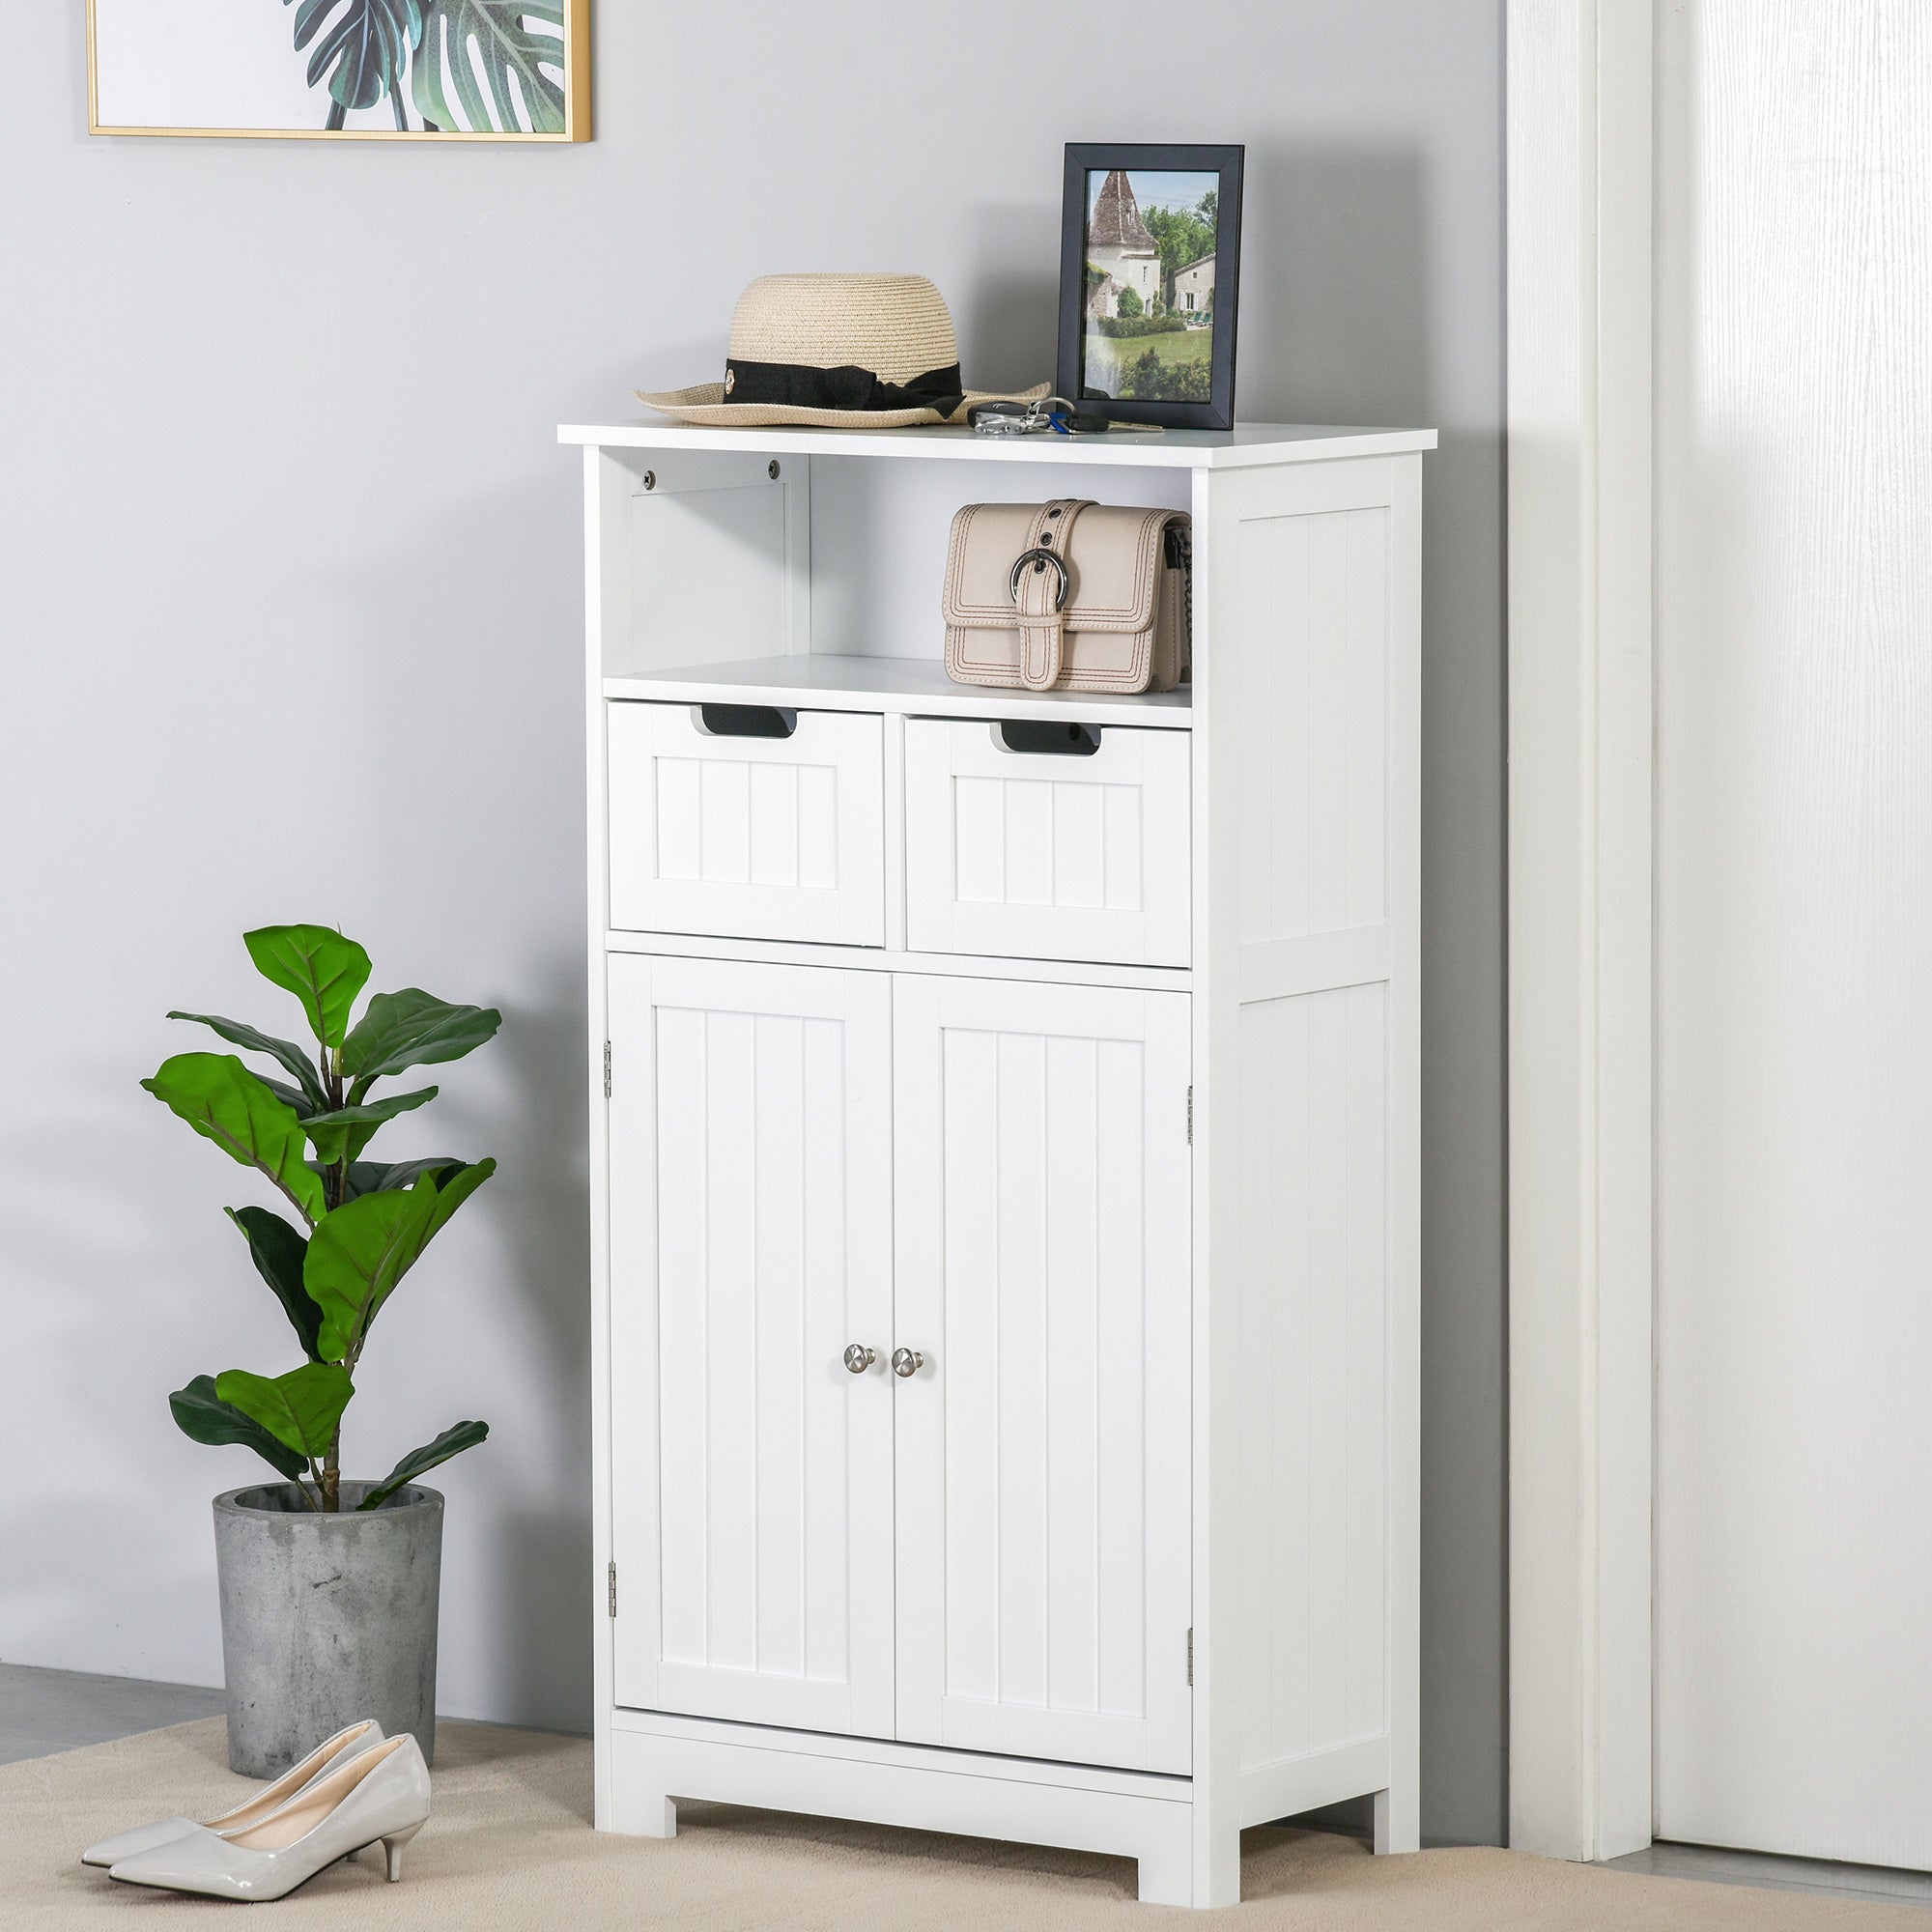 Freestanding Bathroom Cabinet, Narrow Freestanding Unit, Storage Cupboard Organizer with 2 Drawer Adjustable Shelf, White-1